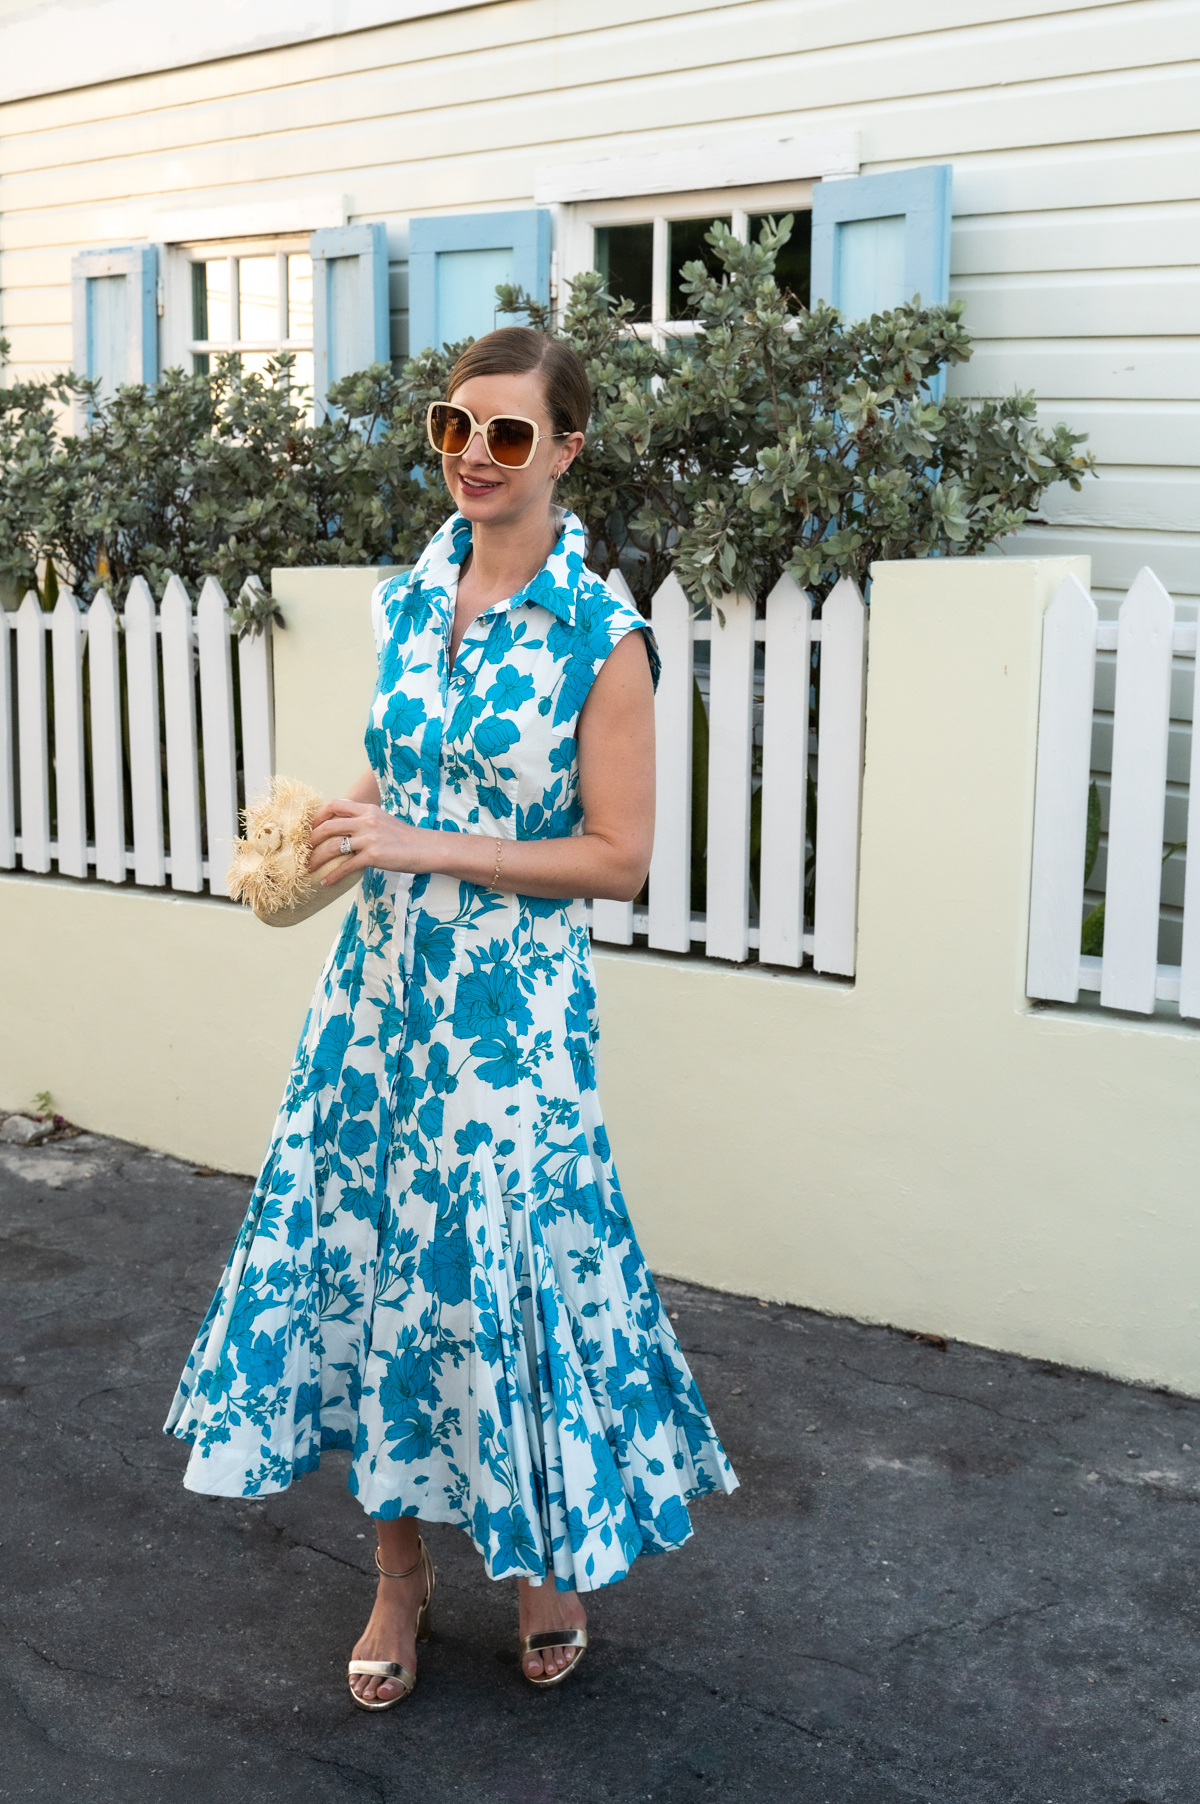 Stacie Flinner MISA blue floral dress Bahamas-11.jpg